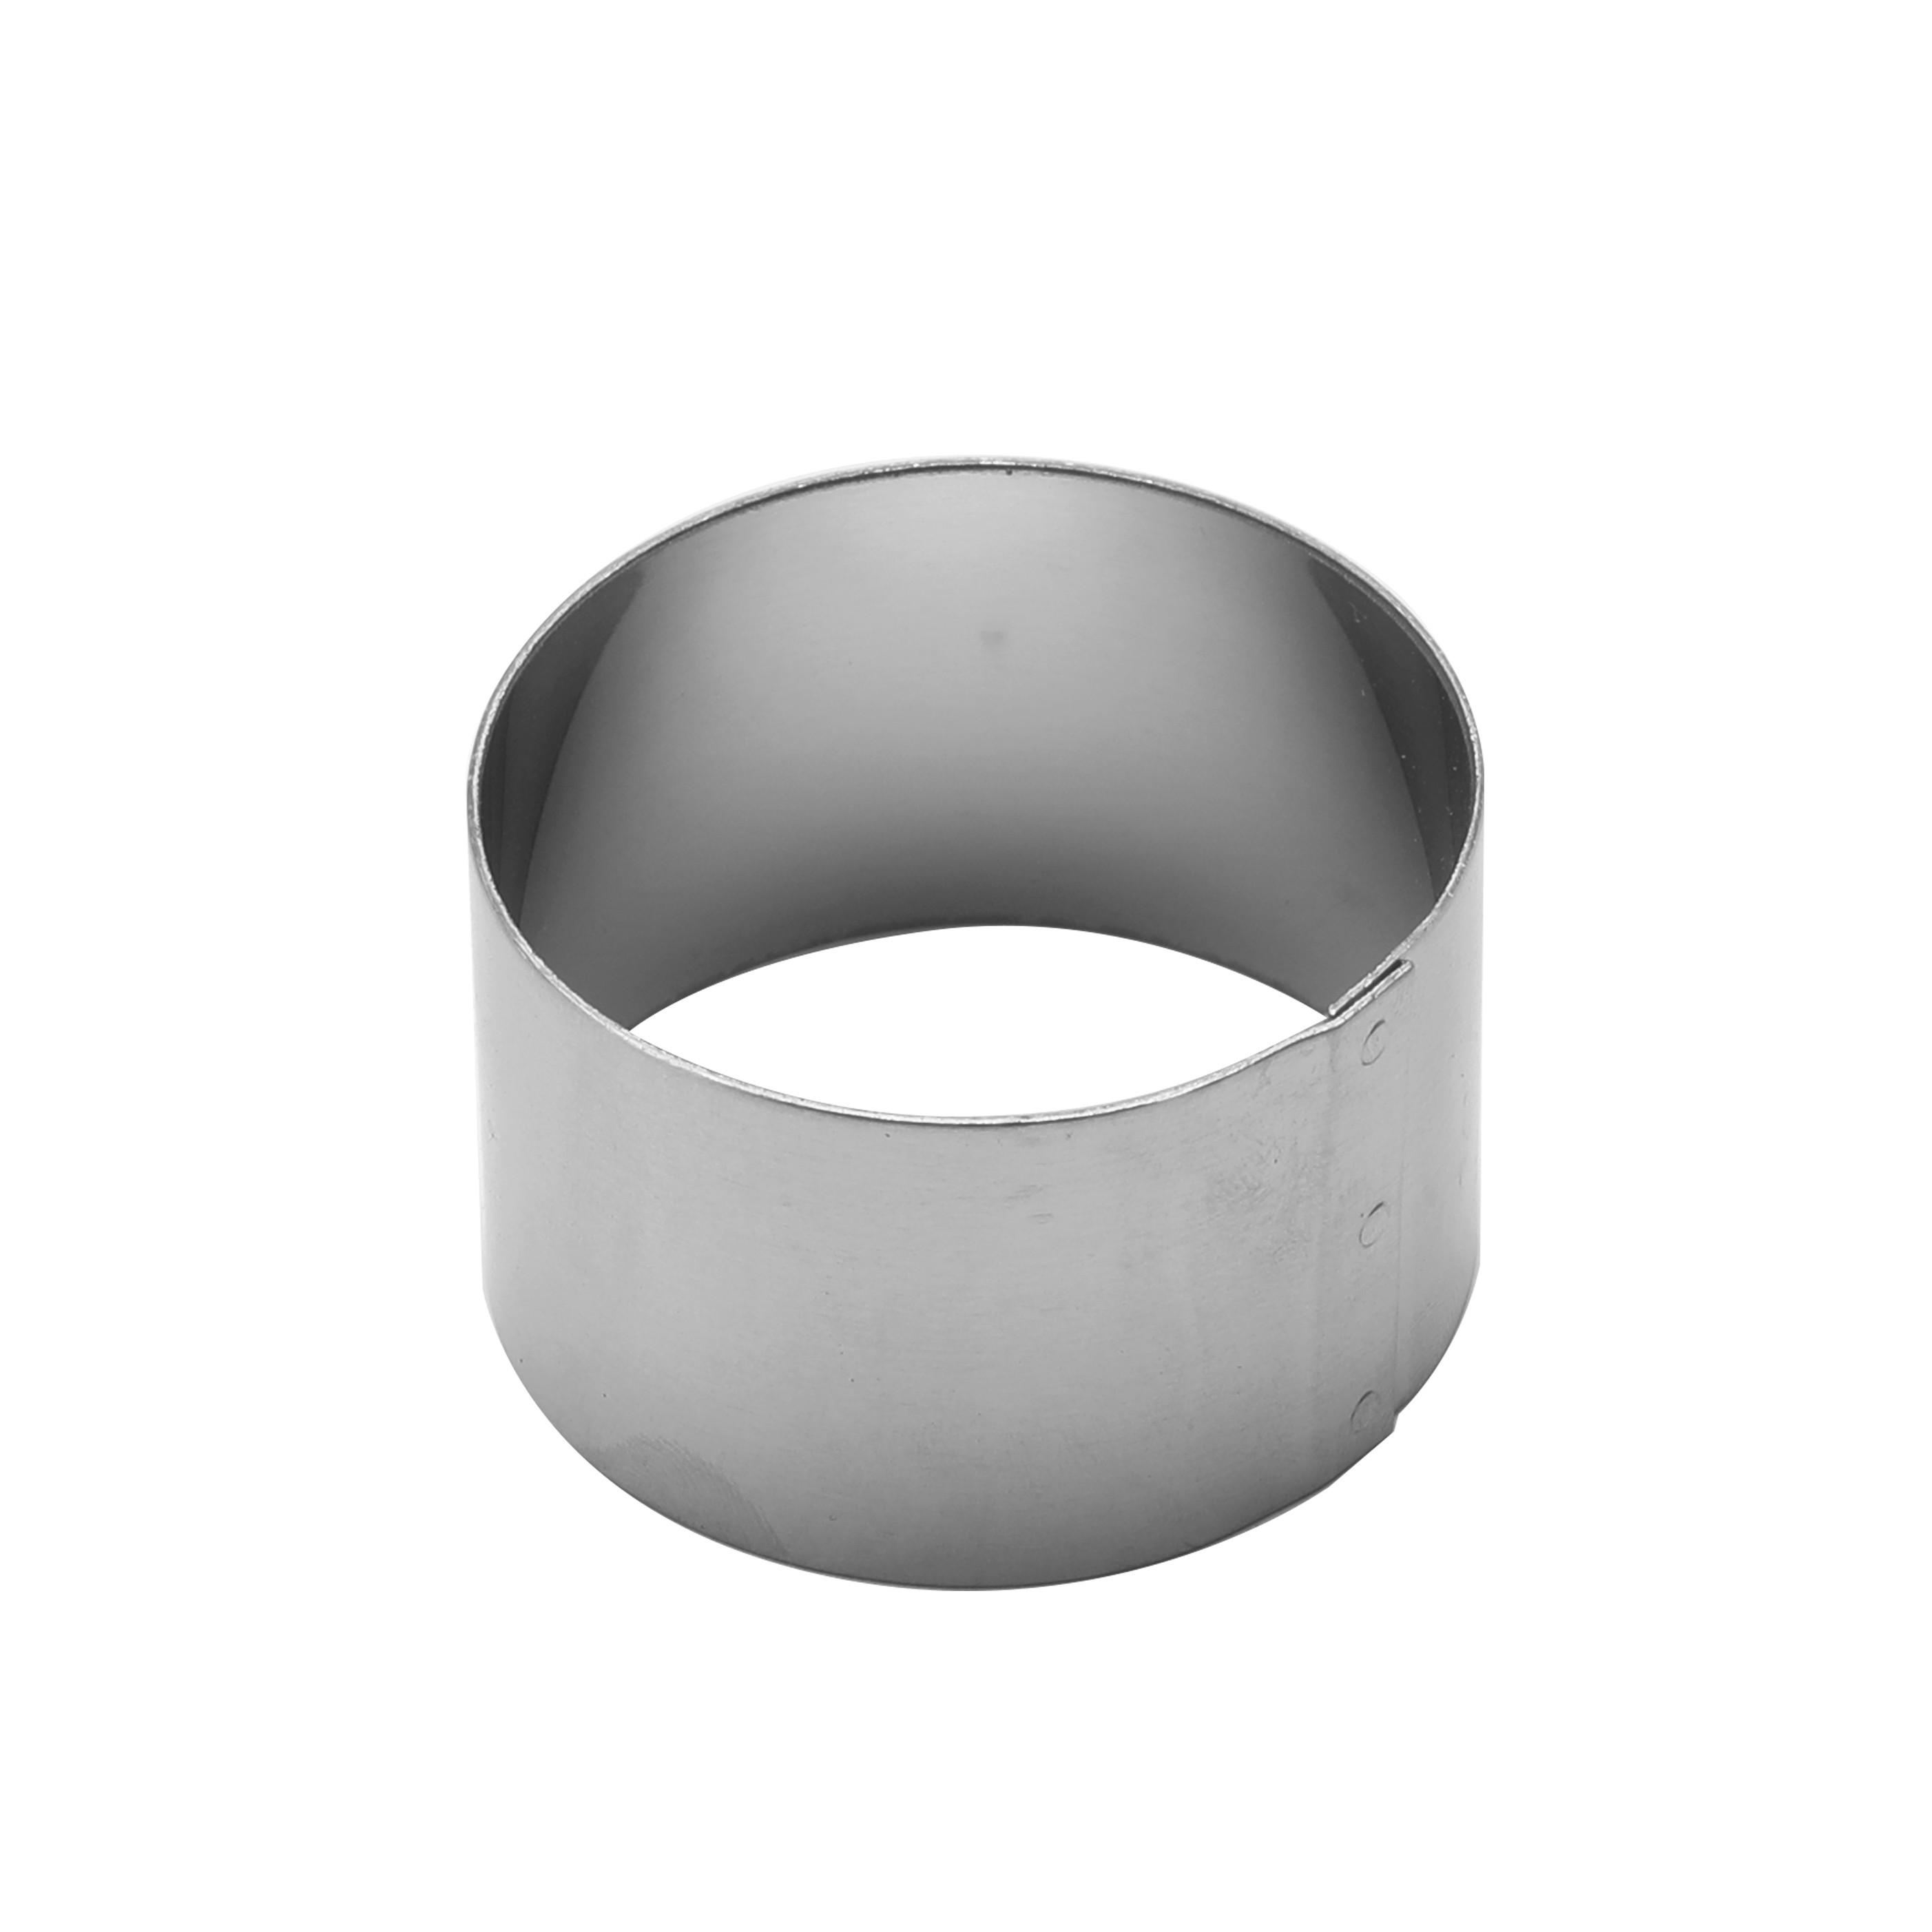 SERVETTRING SET    - silver, Basics, metall (4/2,5cm) - Echtwerk